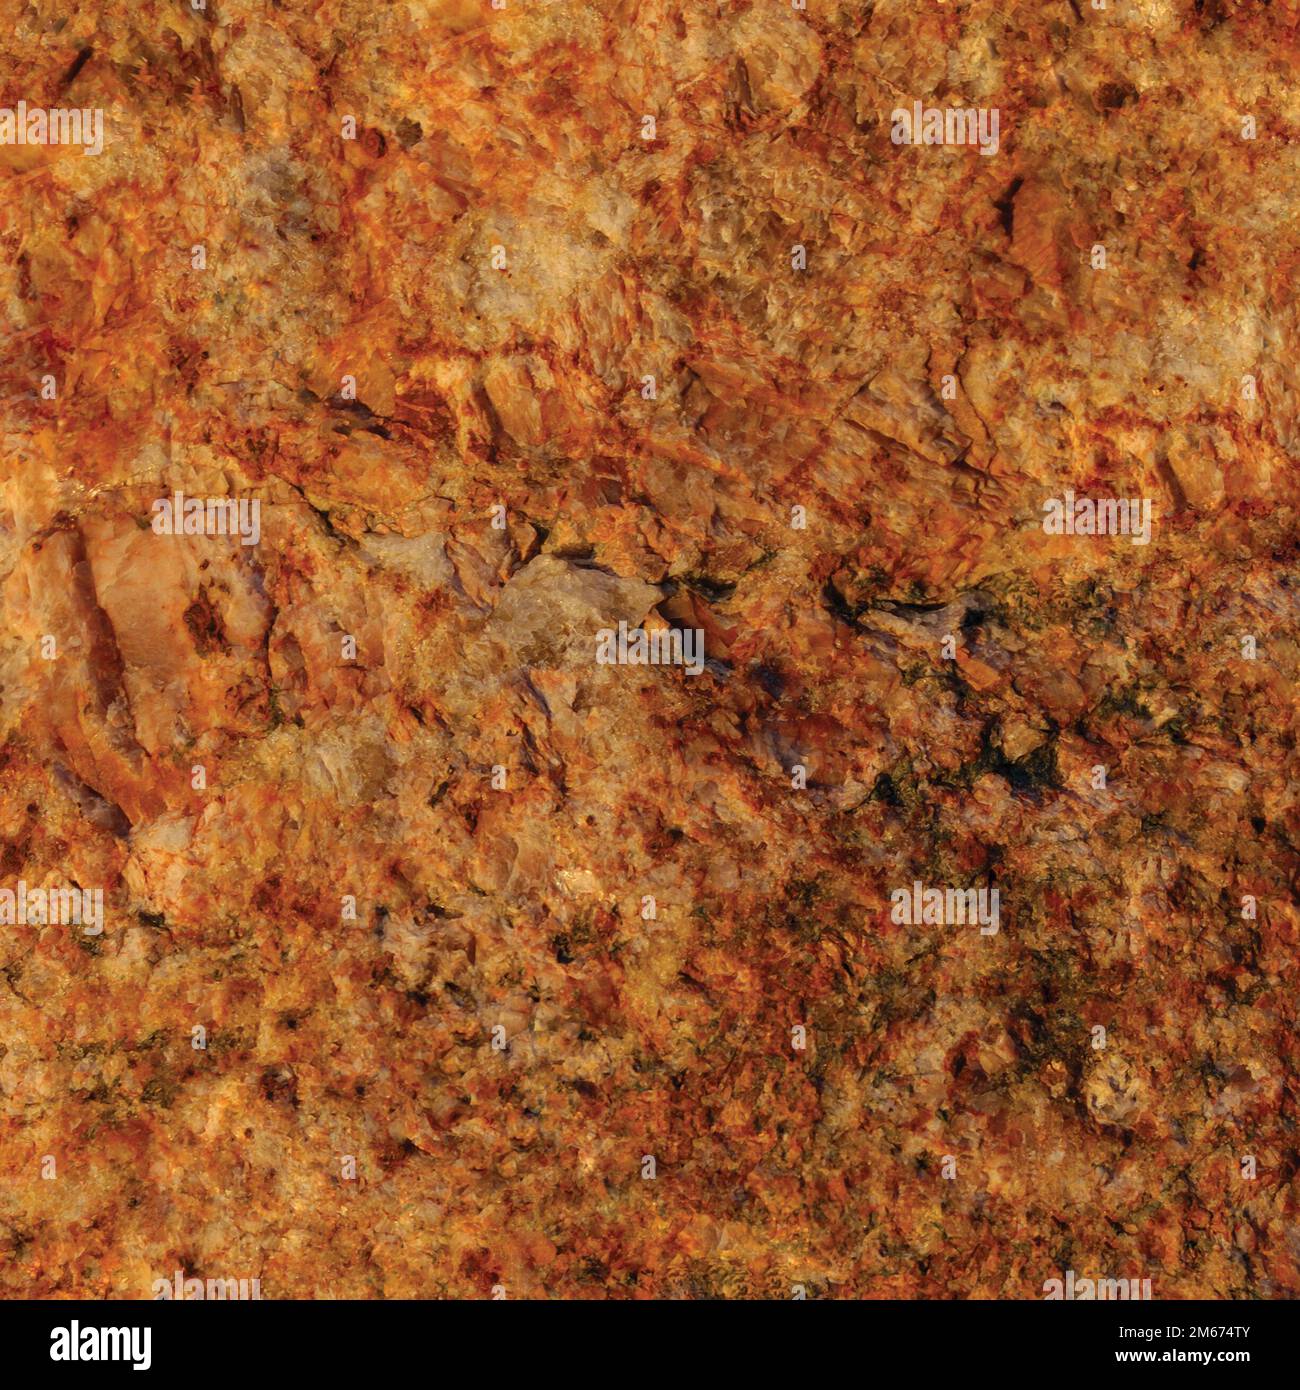 Raw pegmatite feldspar igneous rock terracotta pattern, rusty orange red golden amber yellow vertical background, coarse light crystals  texture large Stock Photo